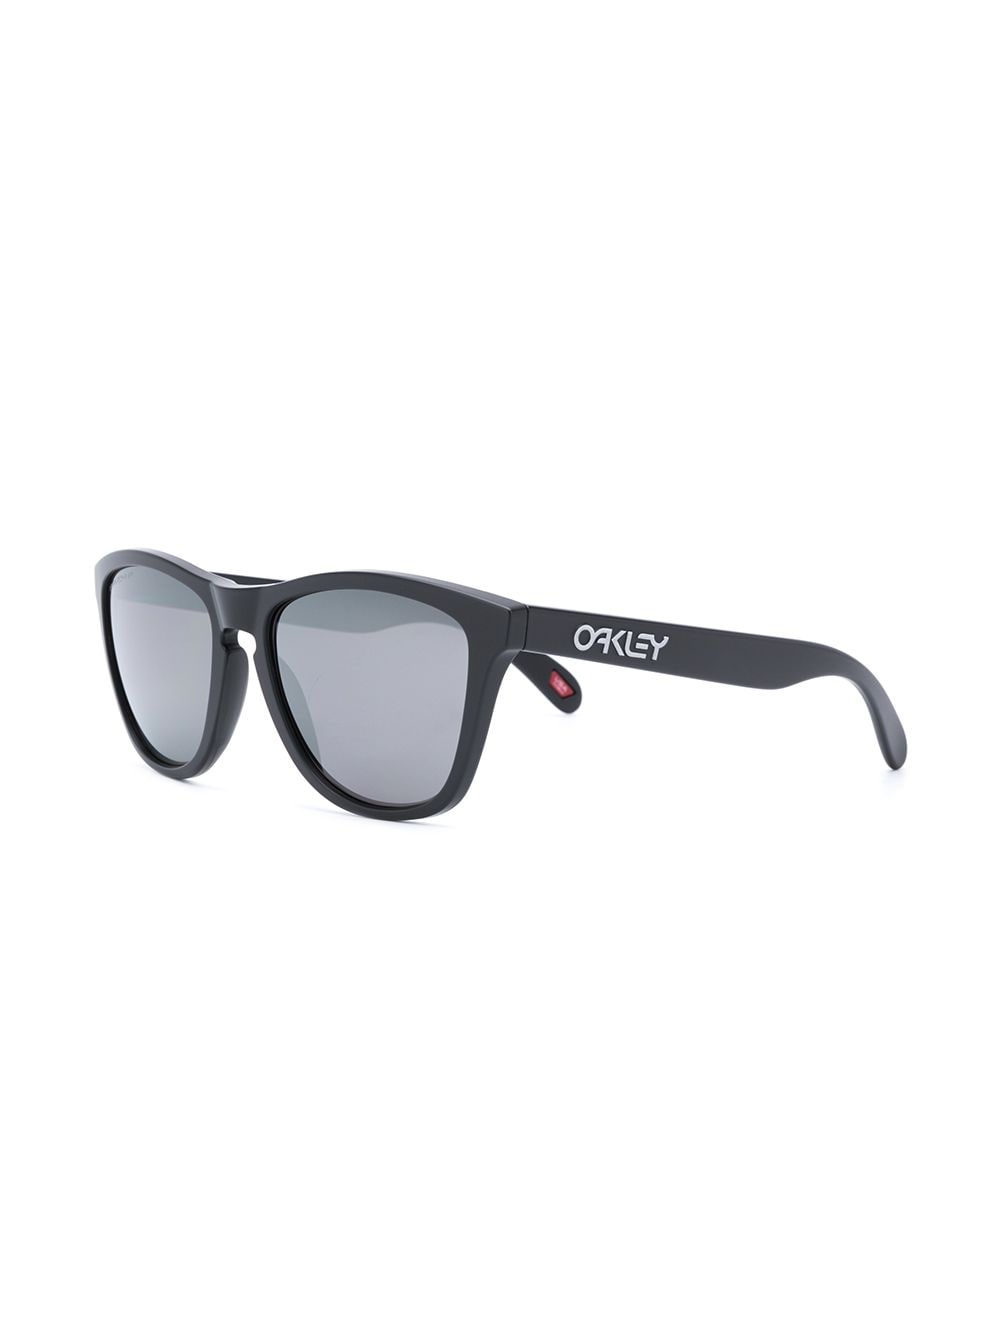 Oakley Holbrook zonnebril met getinte glazen - Zwart